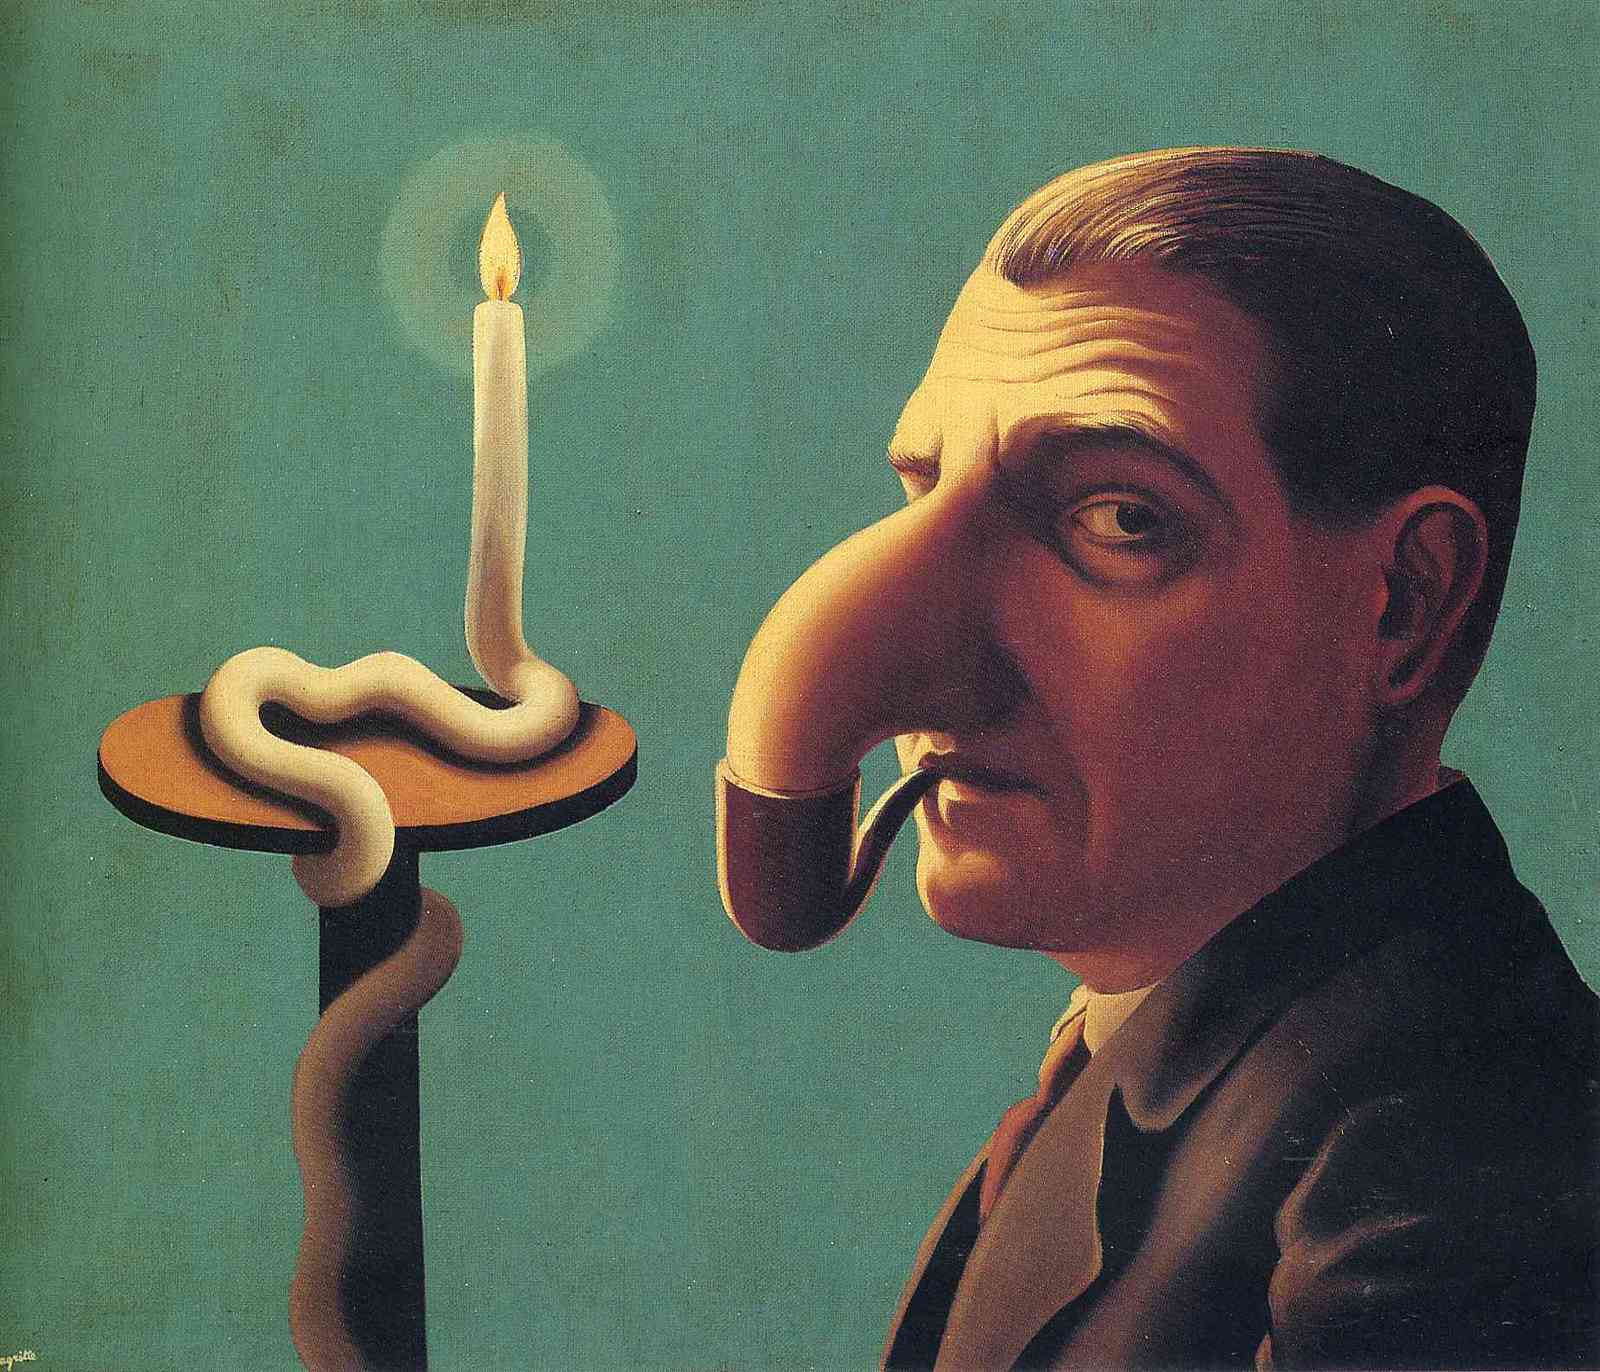 Smoke your nose! - Not mine, Nose, Rene Magritte, A tube, Smoking, Smoking Evil